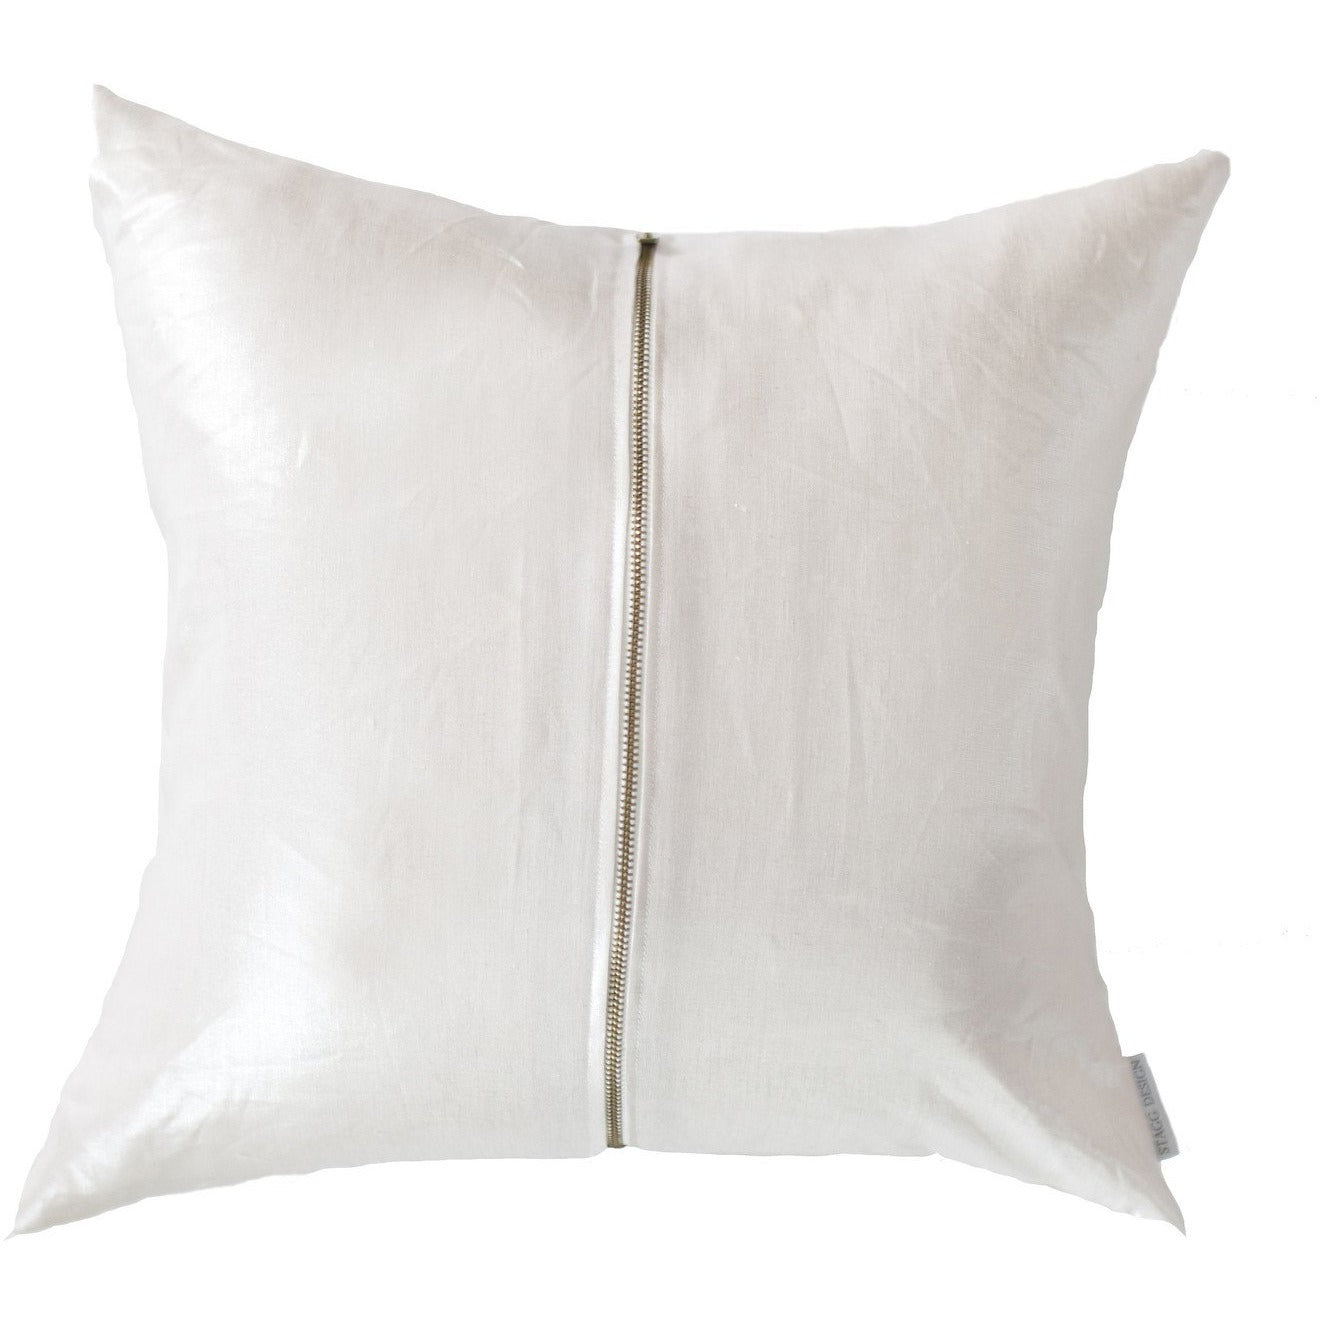 Signature Zip Front Linen Pillow - Metallic Champagne